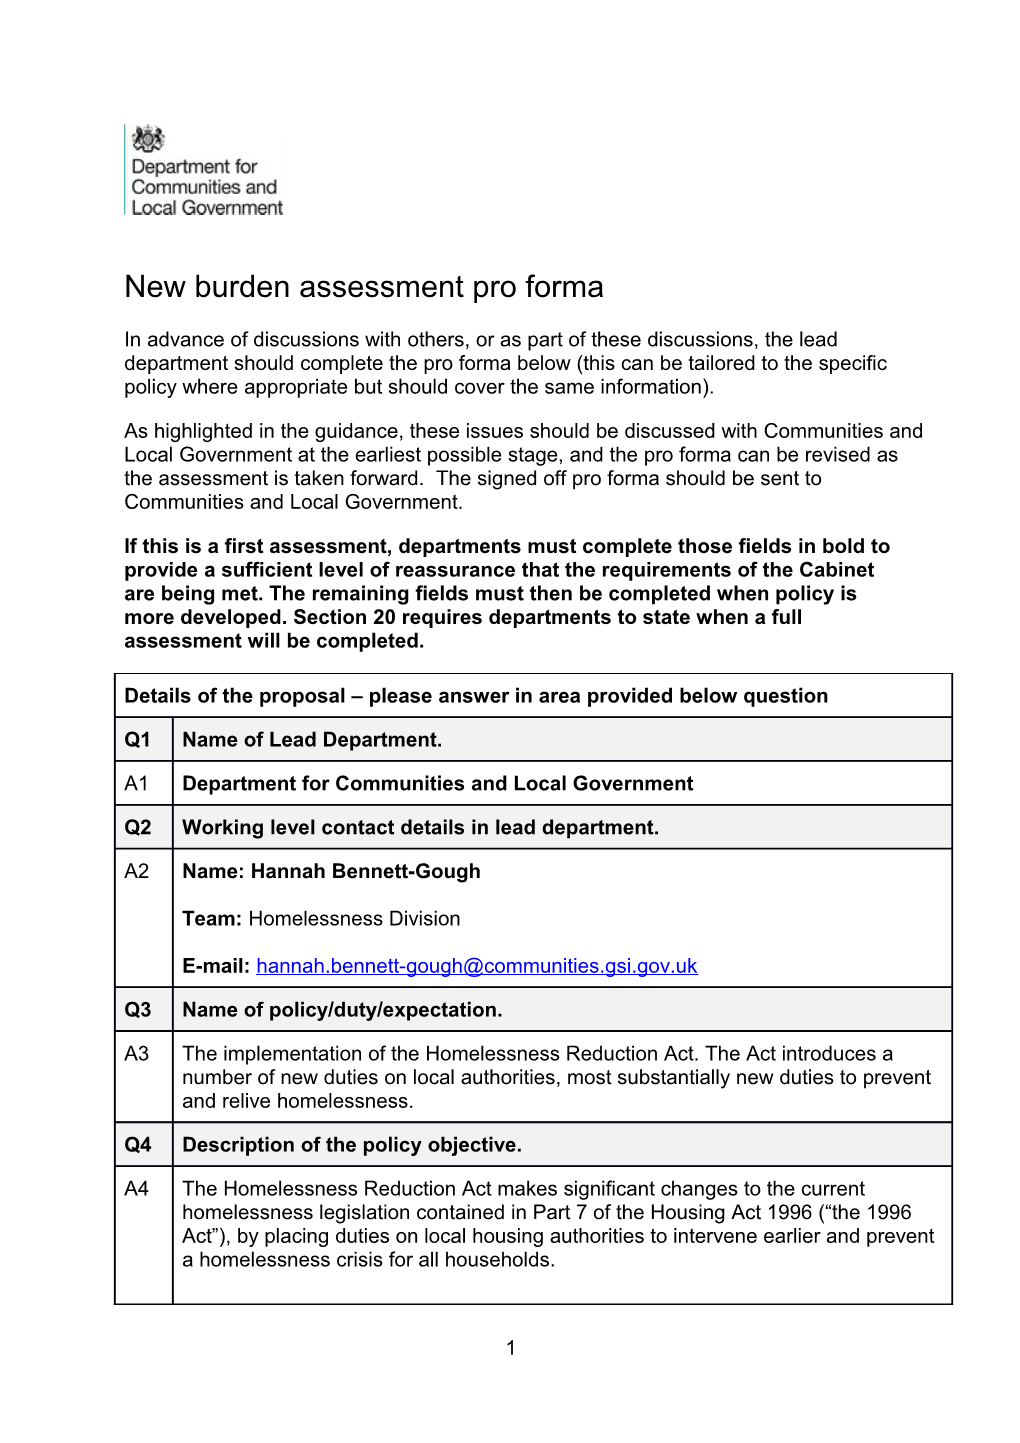 New Burden Assessment Pro Forma